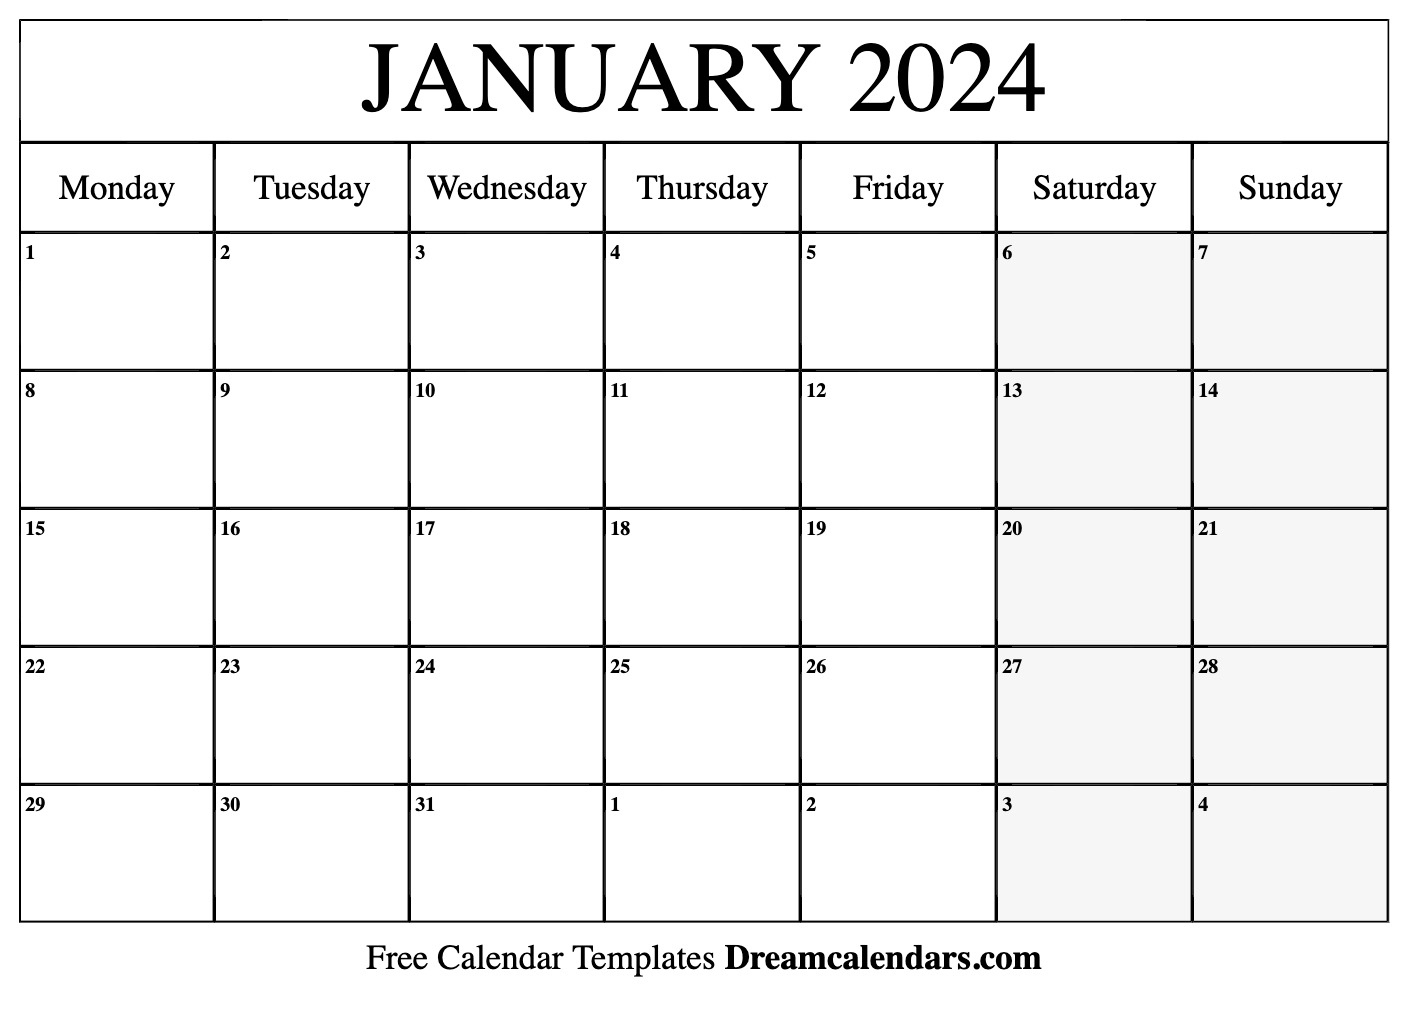 January 2024 Calendar | Free Blank Printable With Holidays | Printable Calendar January 2024 Monday Start